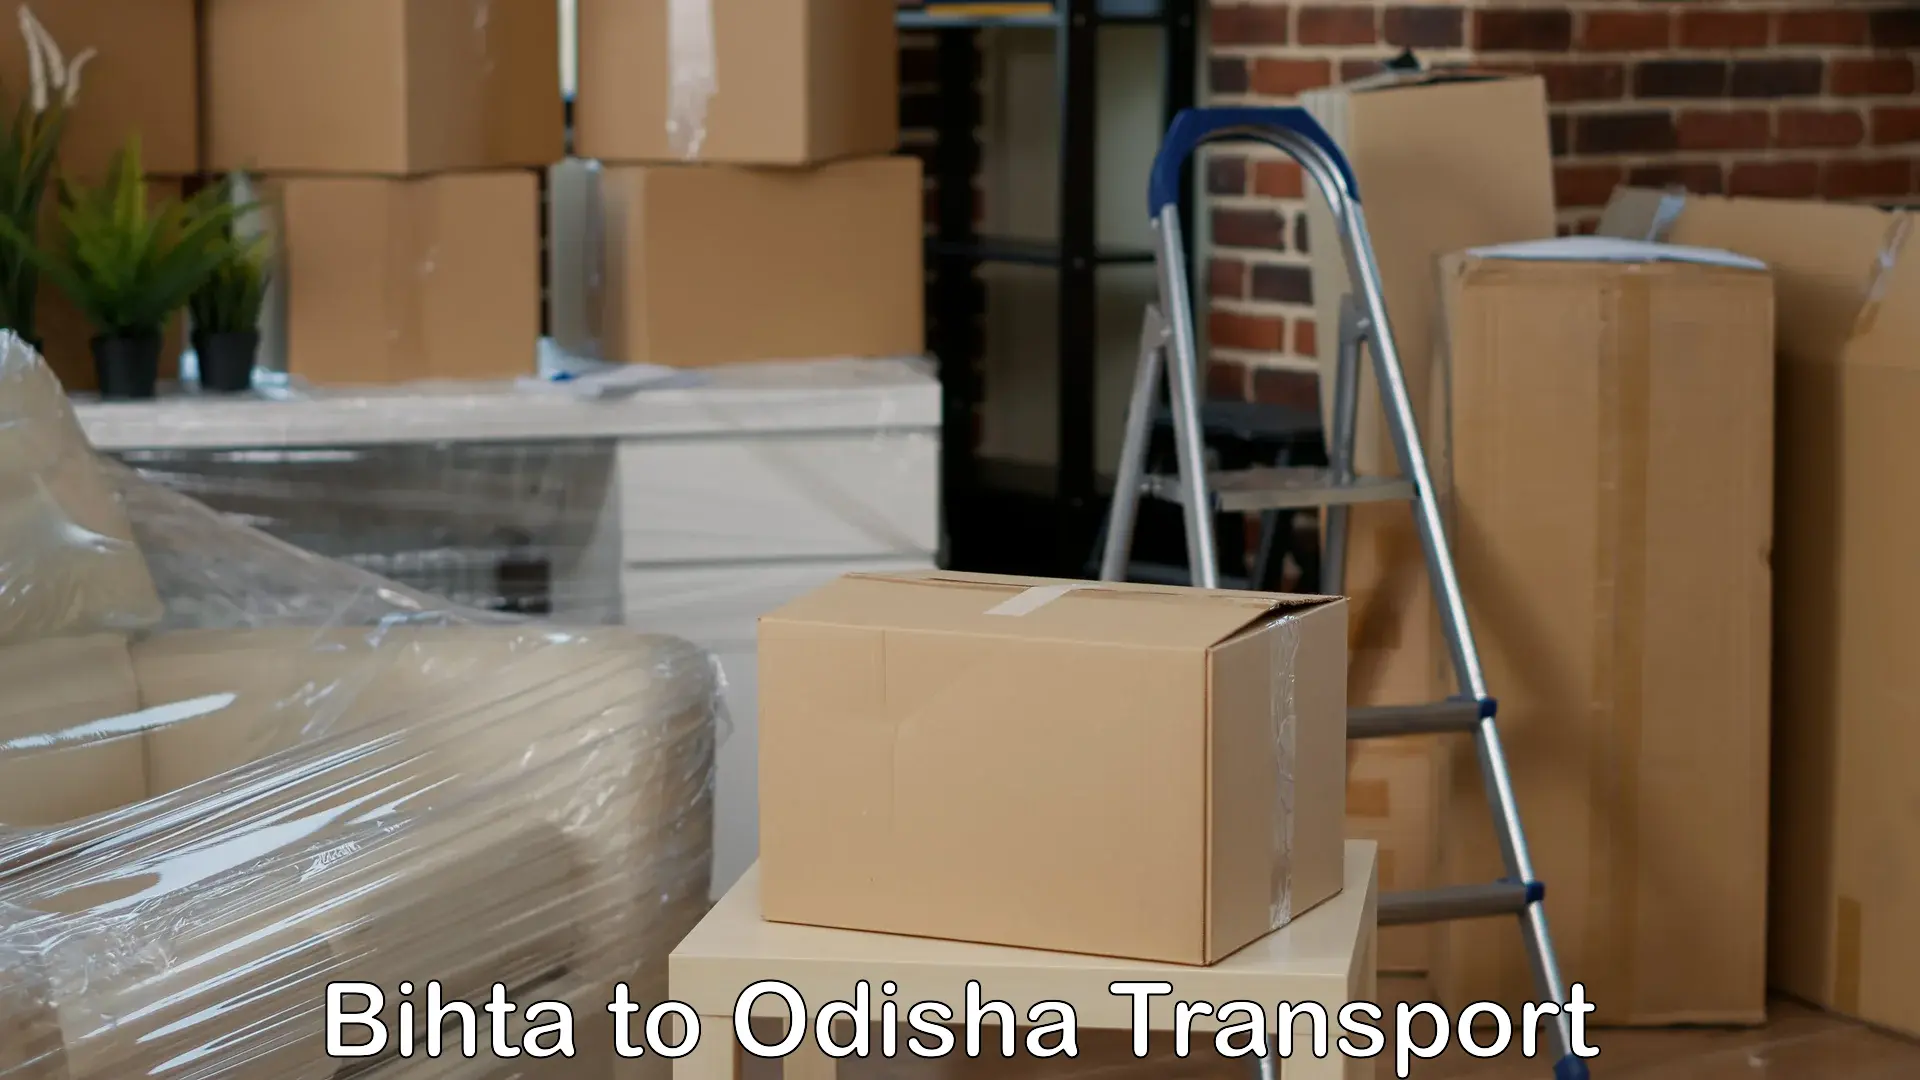 Transport services in Bihta to Sohela